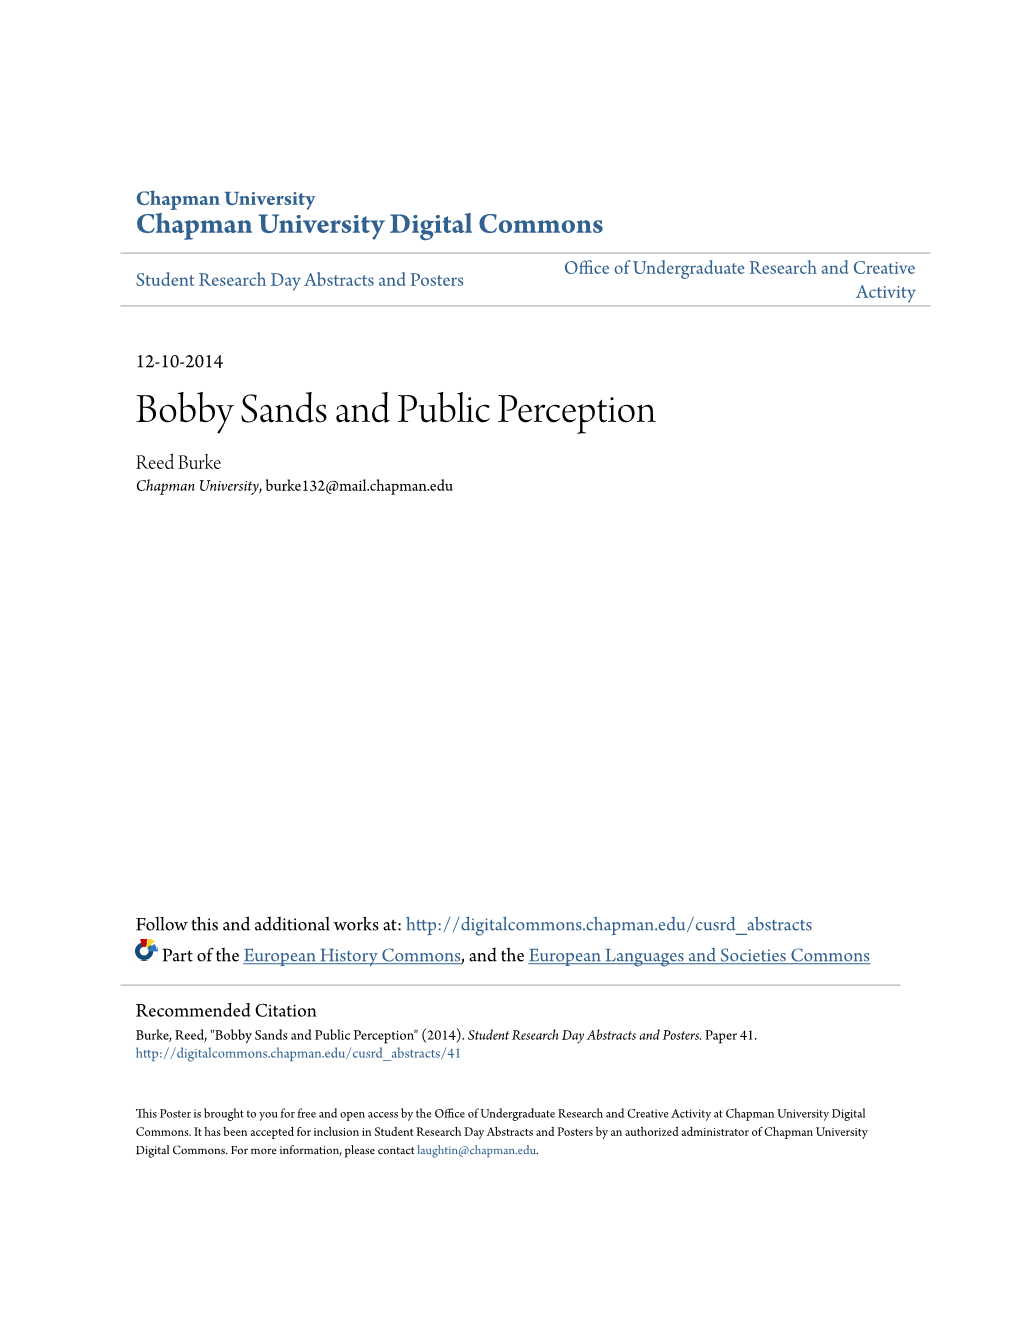 Bobby Sands and Public Perception Reed Burke Chapman University, Burke132@Mail.Chapman.Edu